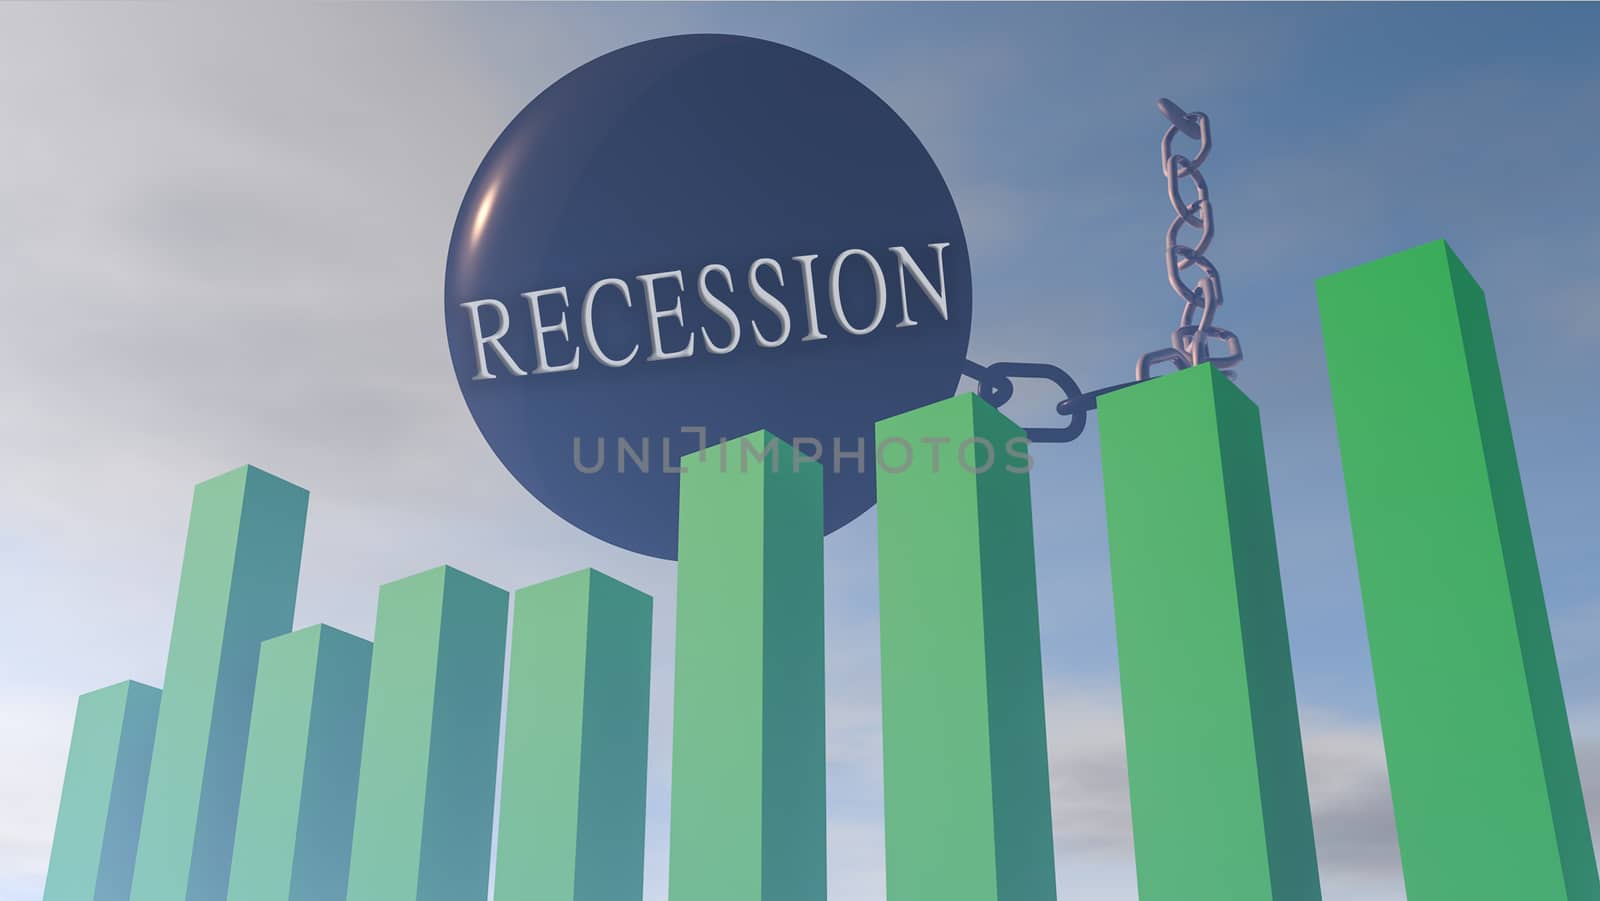 3D rendering illustration of financial stock market influenced by 3D rendering illustration of financial stock market influenced by recession